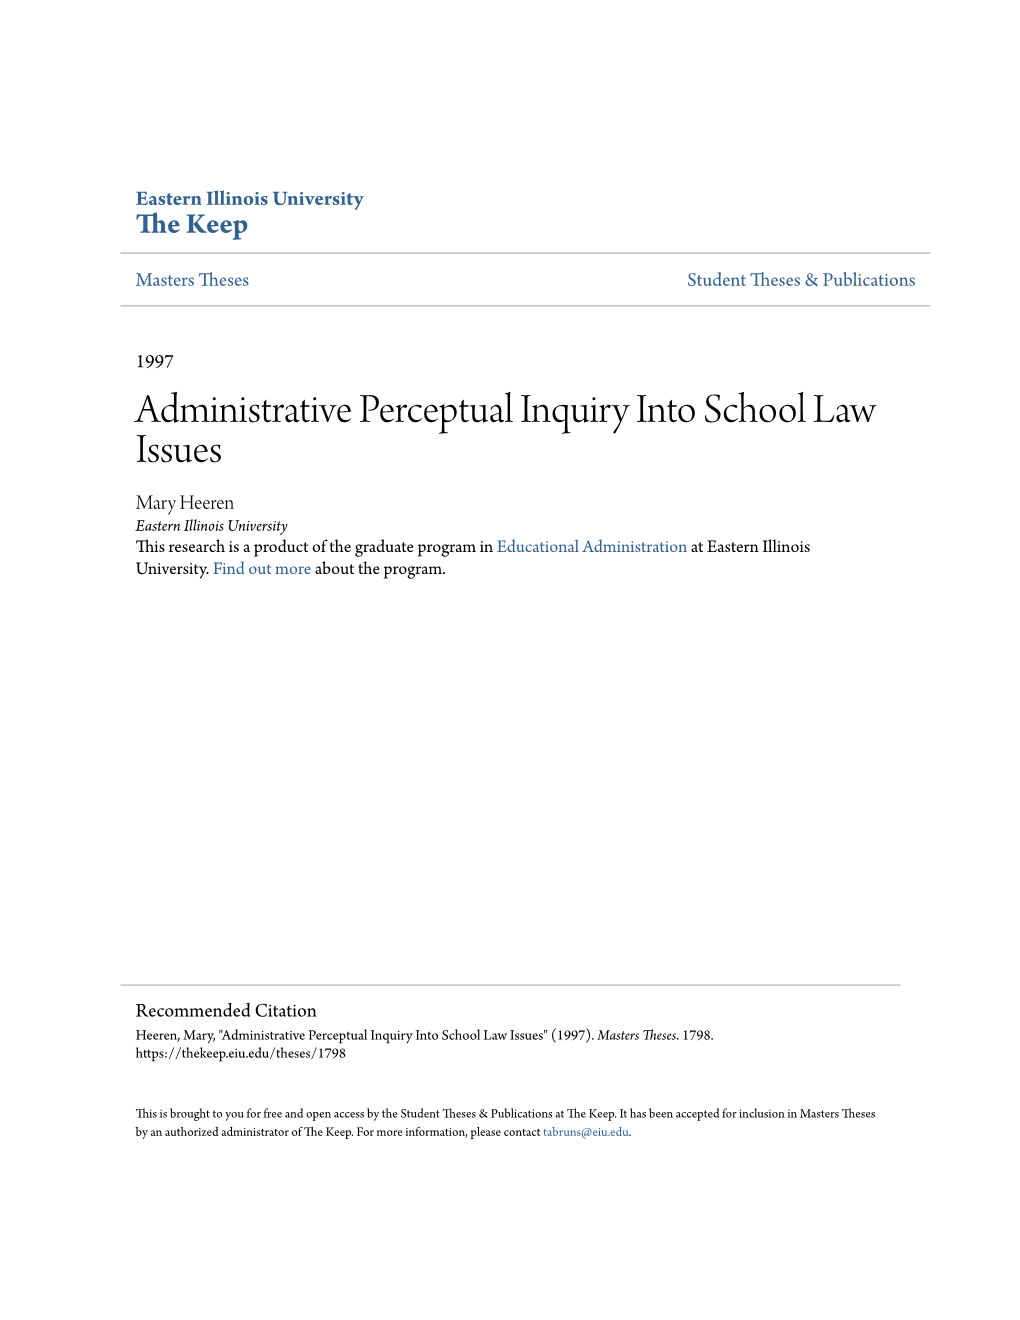 Administrative Perceptual Inquiry Into School Law Issues